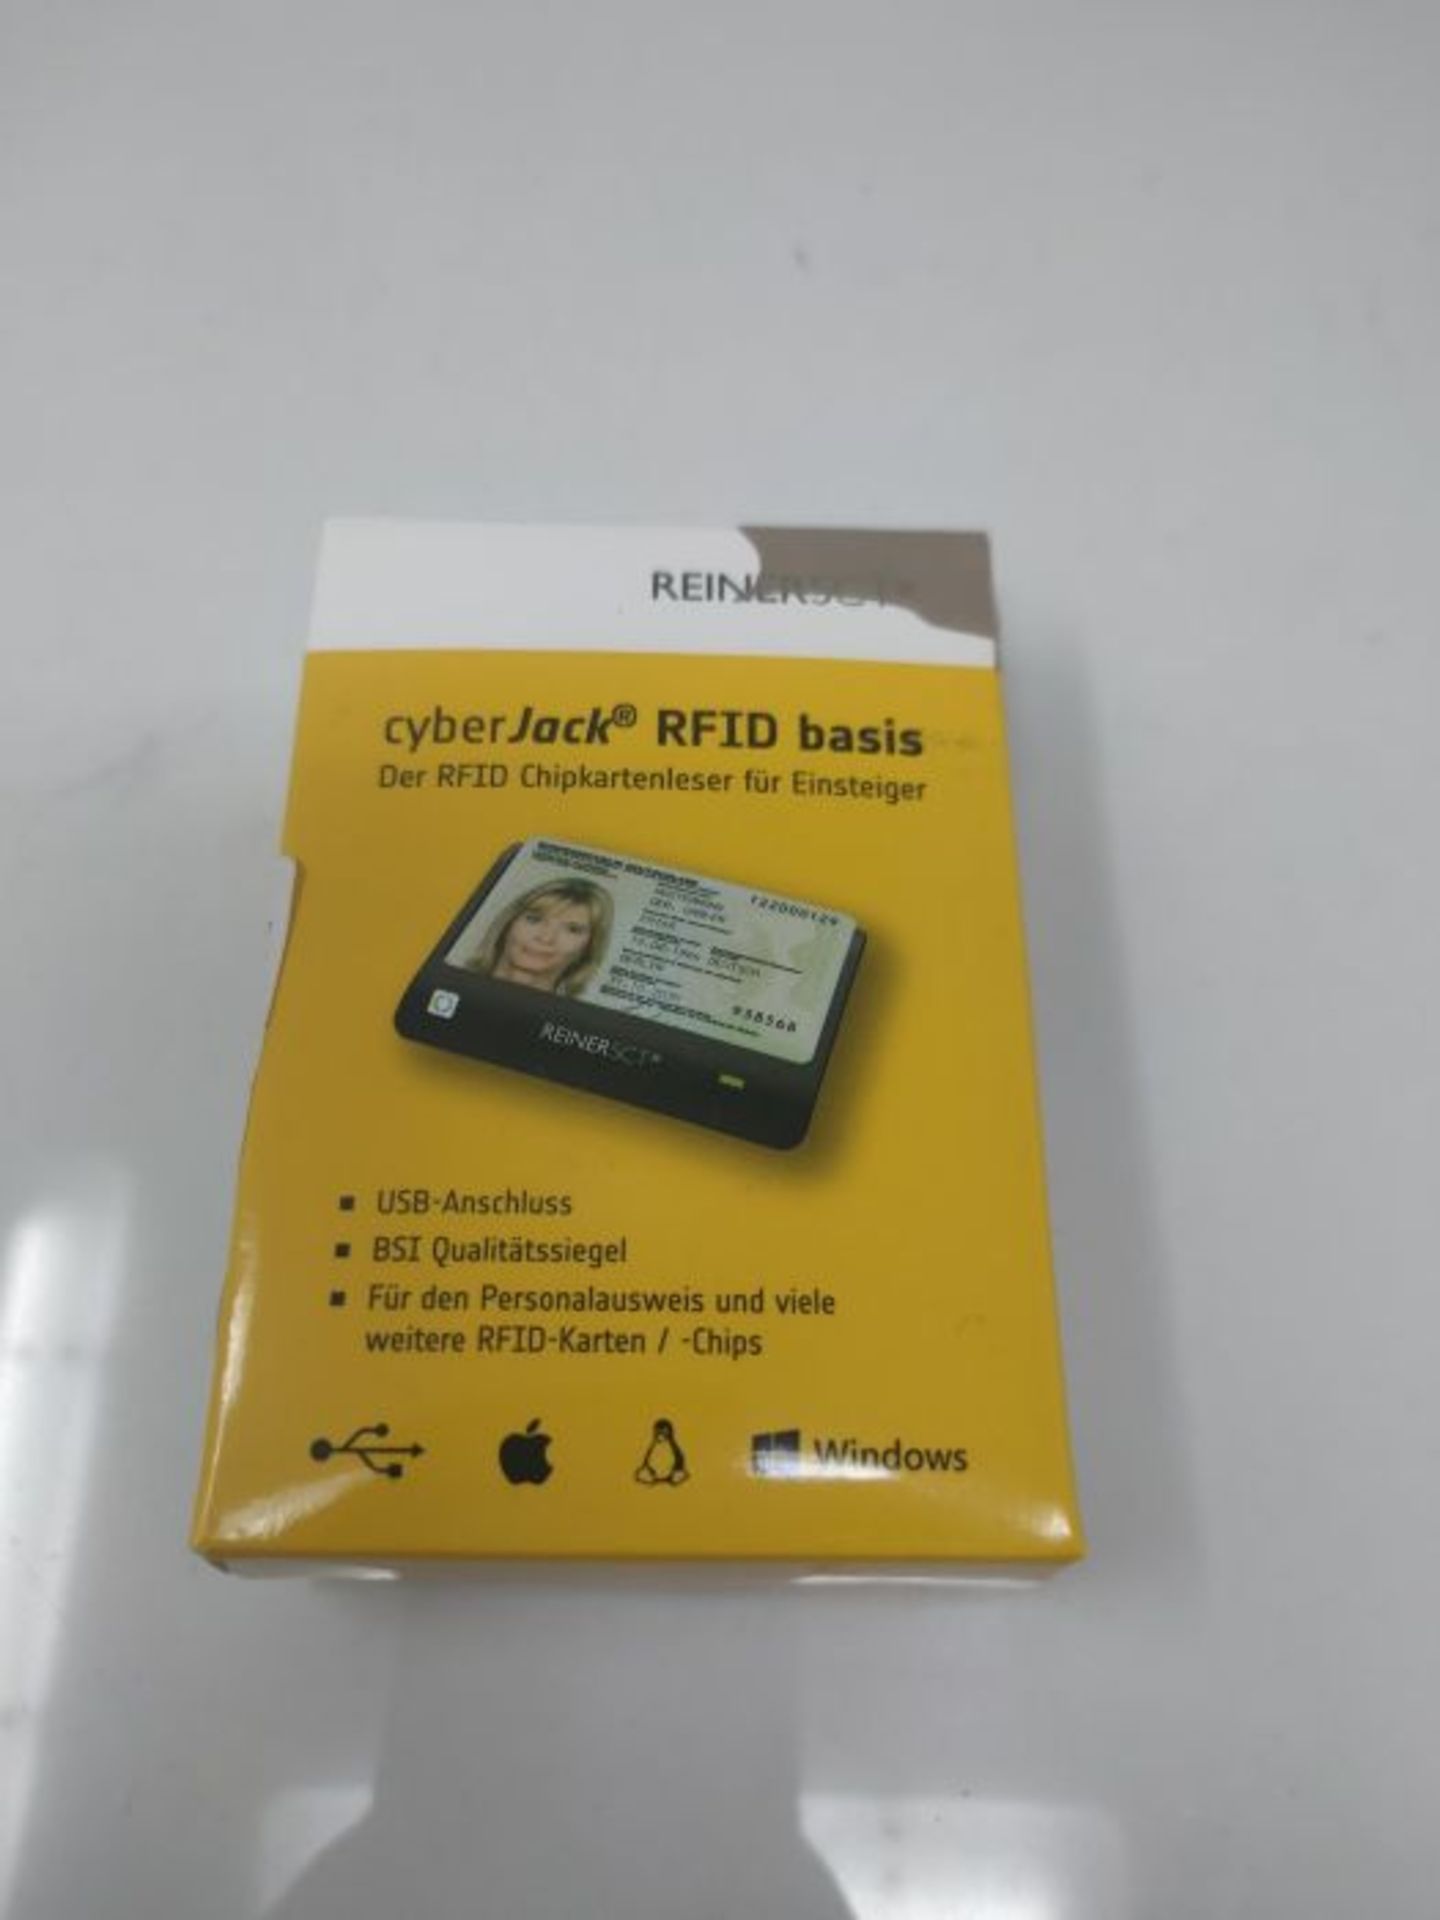 REINER SCT cyberJack RFID Chip-Kartenleser basis | FÃ¼r den neuen Personalausweis (n - Image 2 of 3